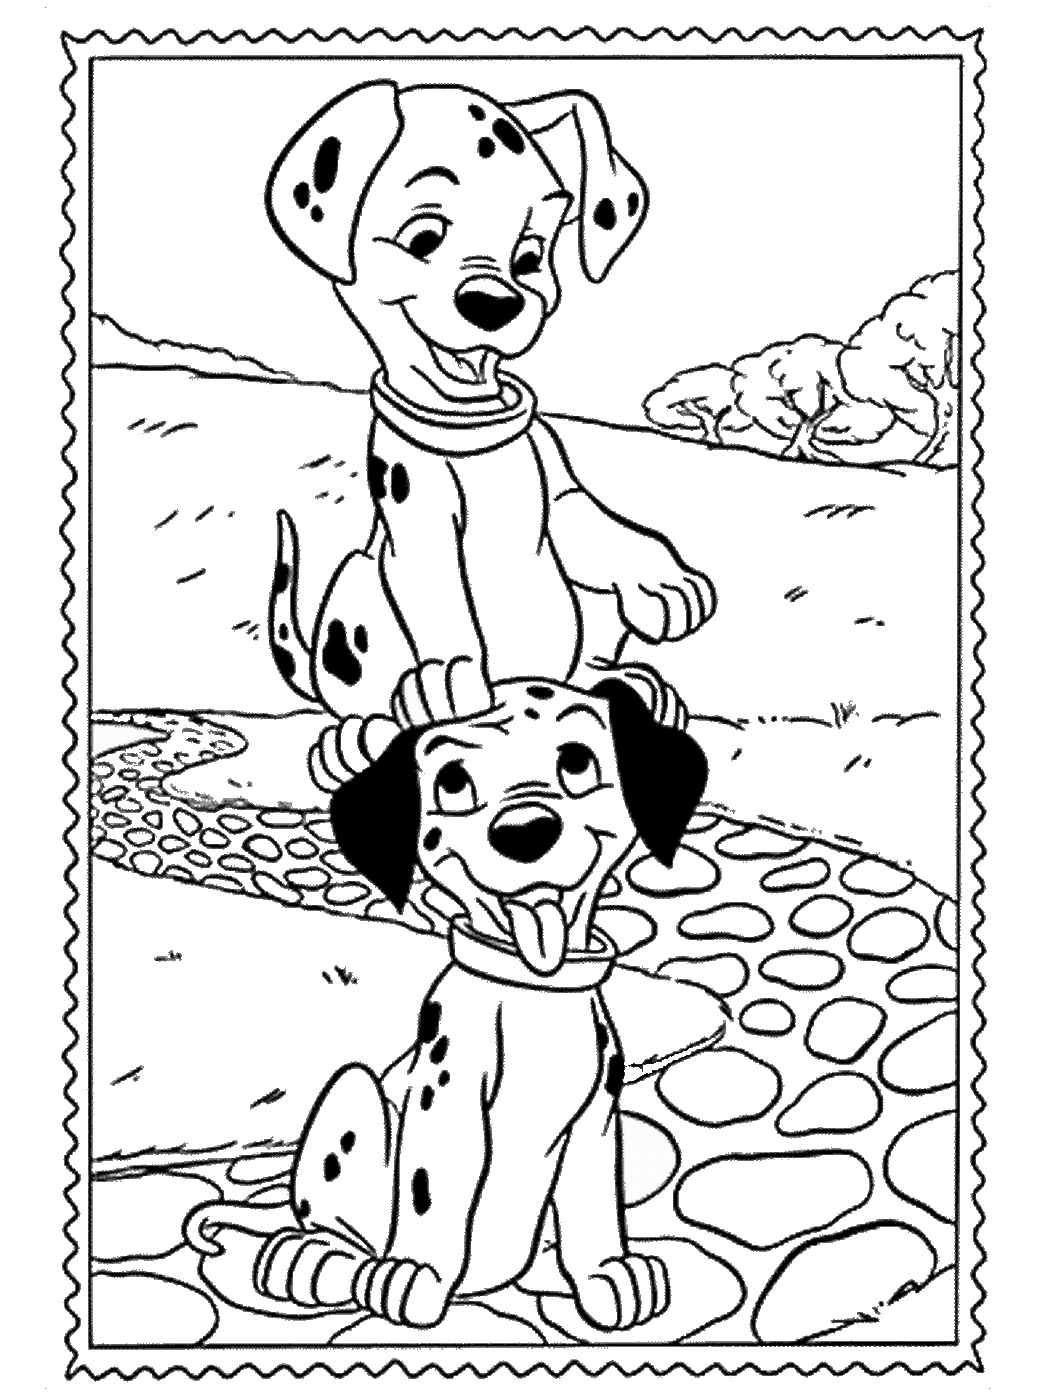 101 Dalmatians Coloring Pages Cartoons dalmatic1 Printable 2020 66 Coloring4free